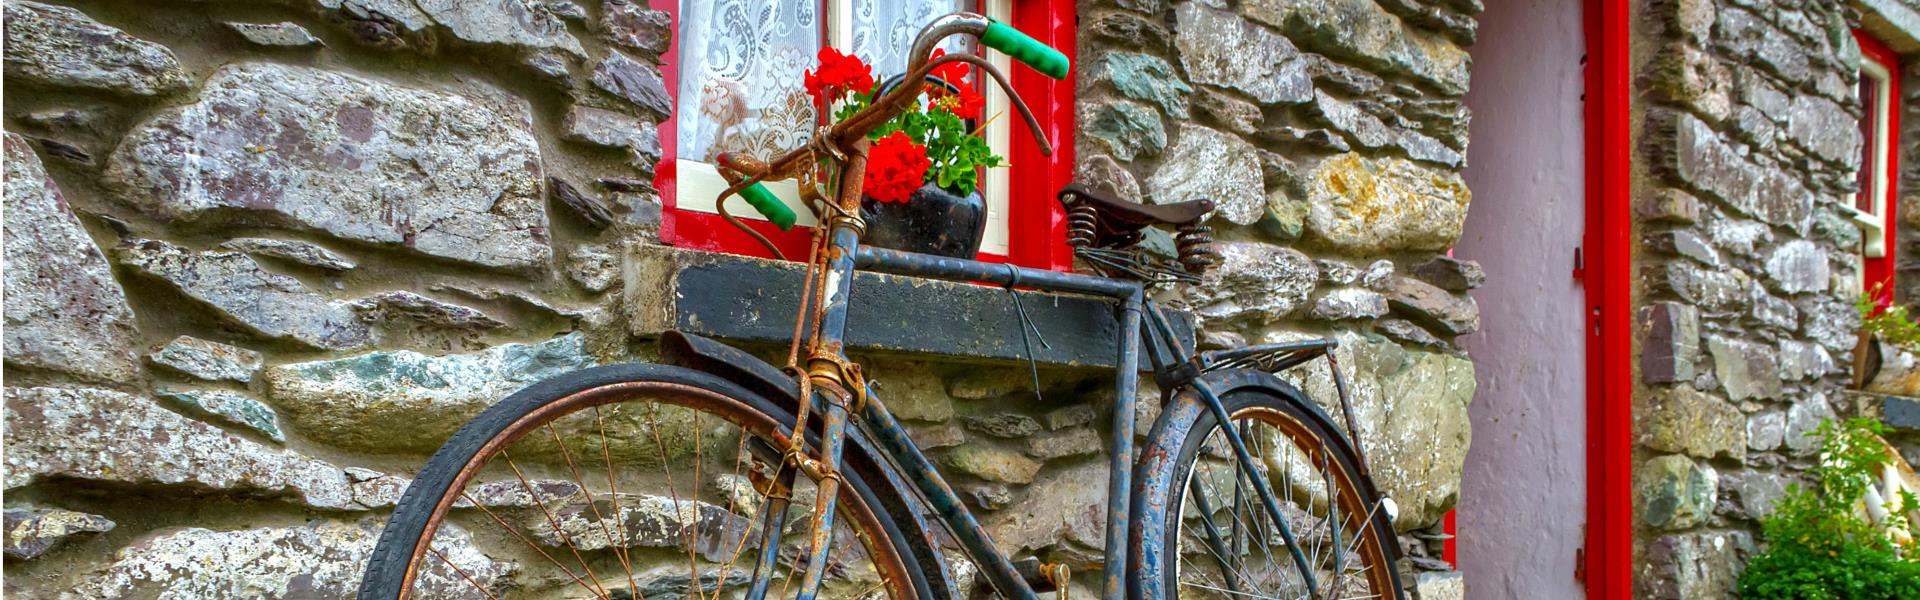 Bicycle outside cottage - Classic Ireland